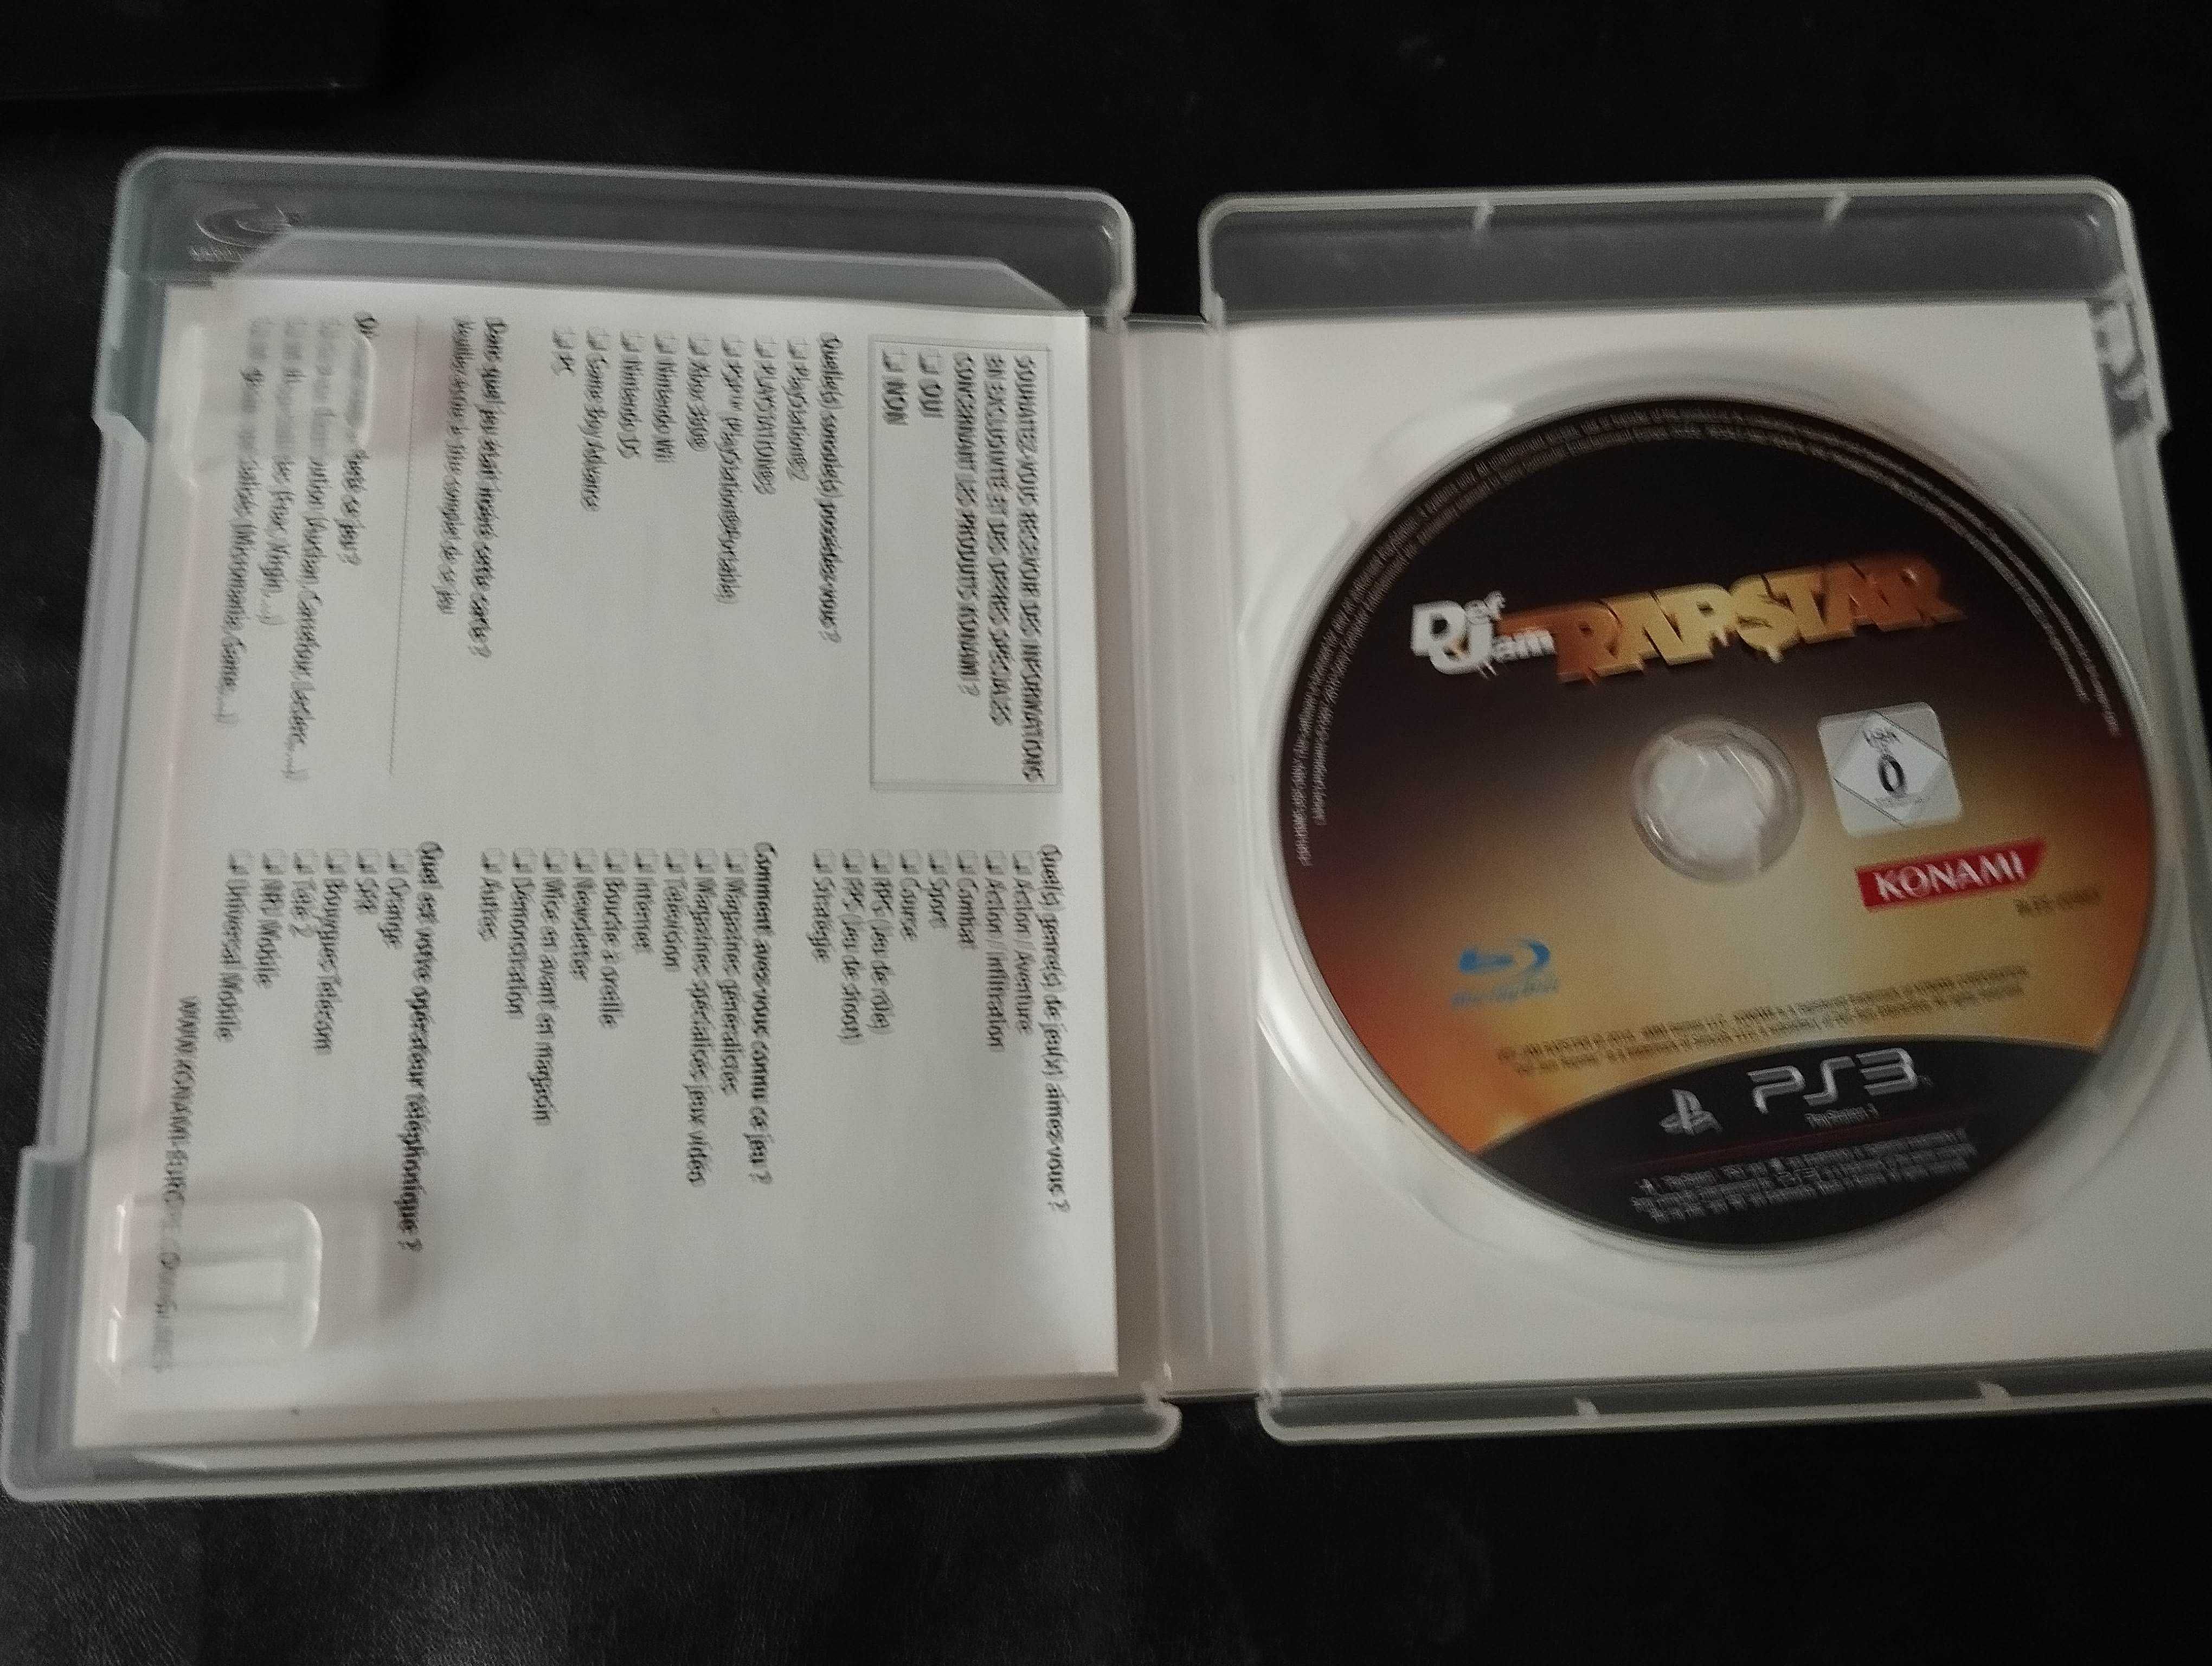 Def Jam RapStar - PS3 - duży wybór gier PlayStation